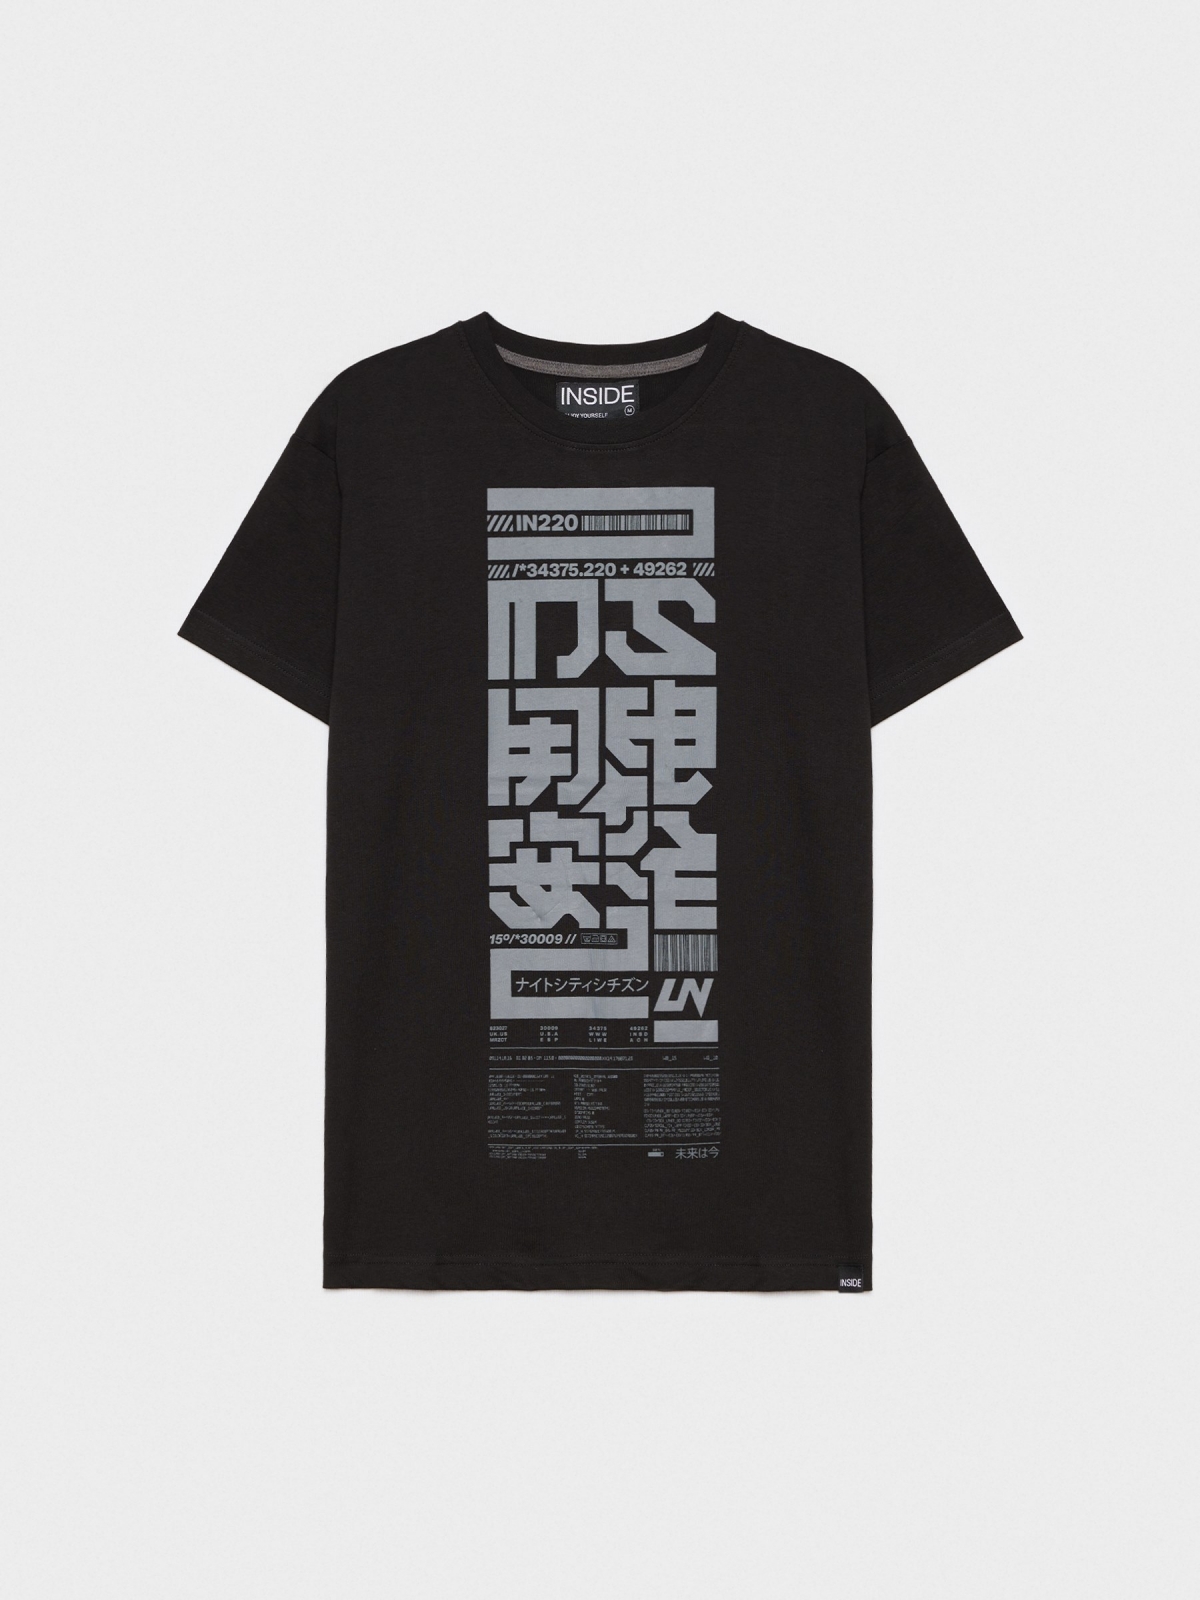  Japanese style black T-shirt black